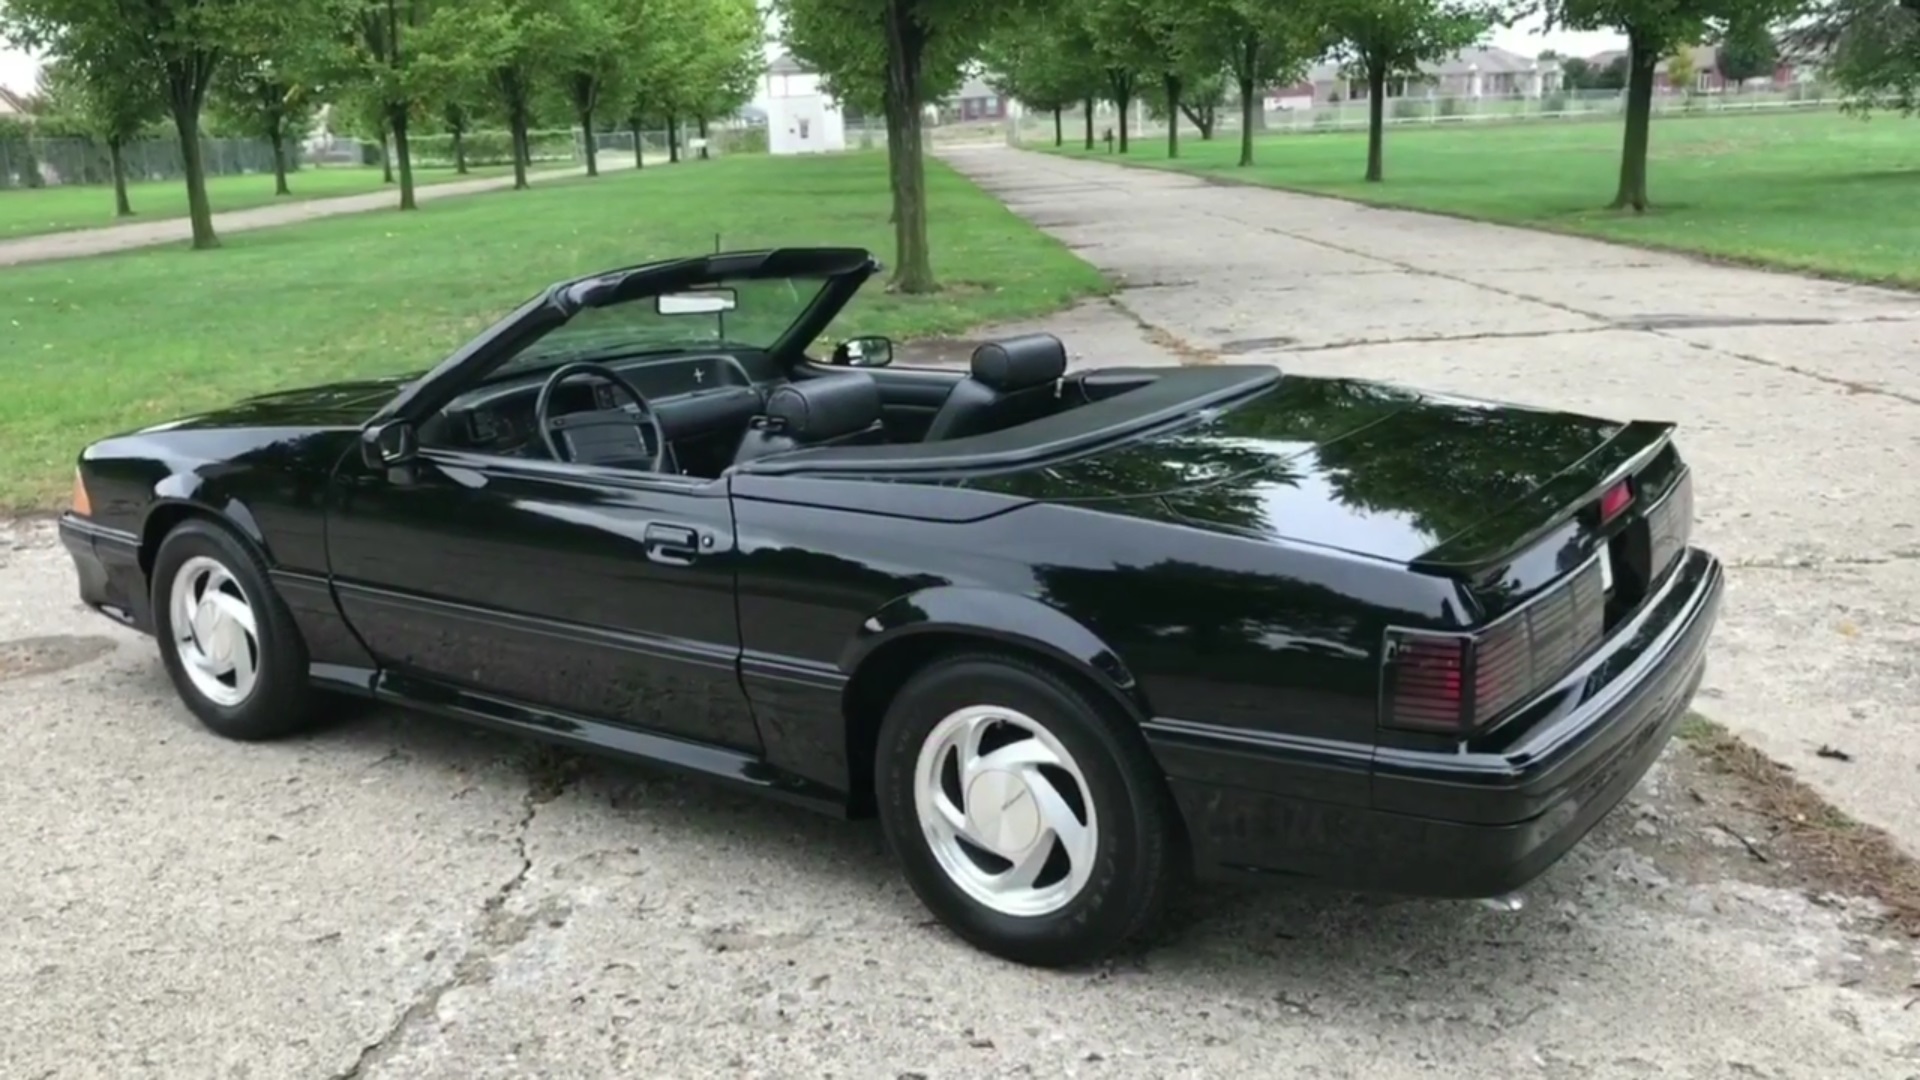 Video: 1990 Ford Mustang ASC McLaren Walkaround + Test Drive